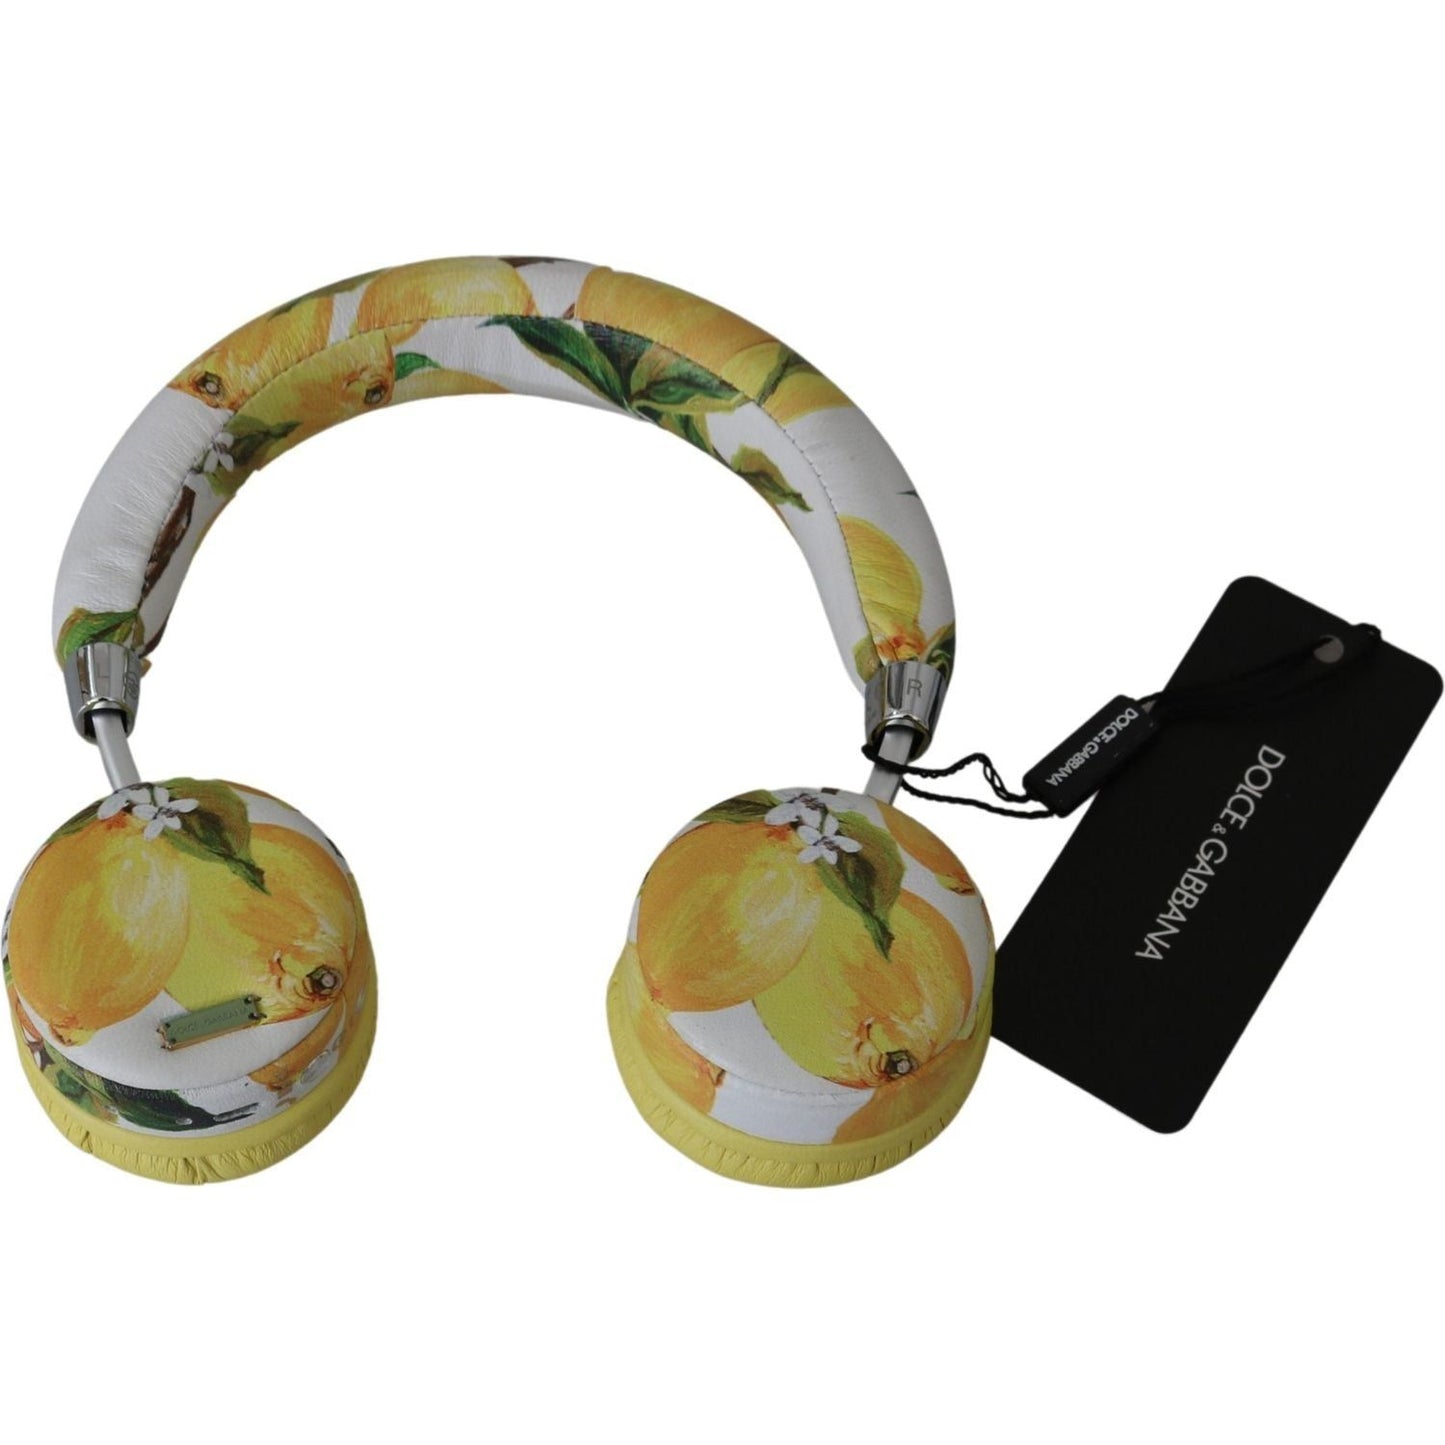 Dolce & Gabbana Chic White Leather Headphones with Yellow Print white-yellow-lemon-print-headset-headphones